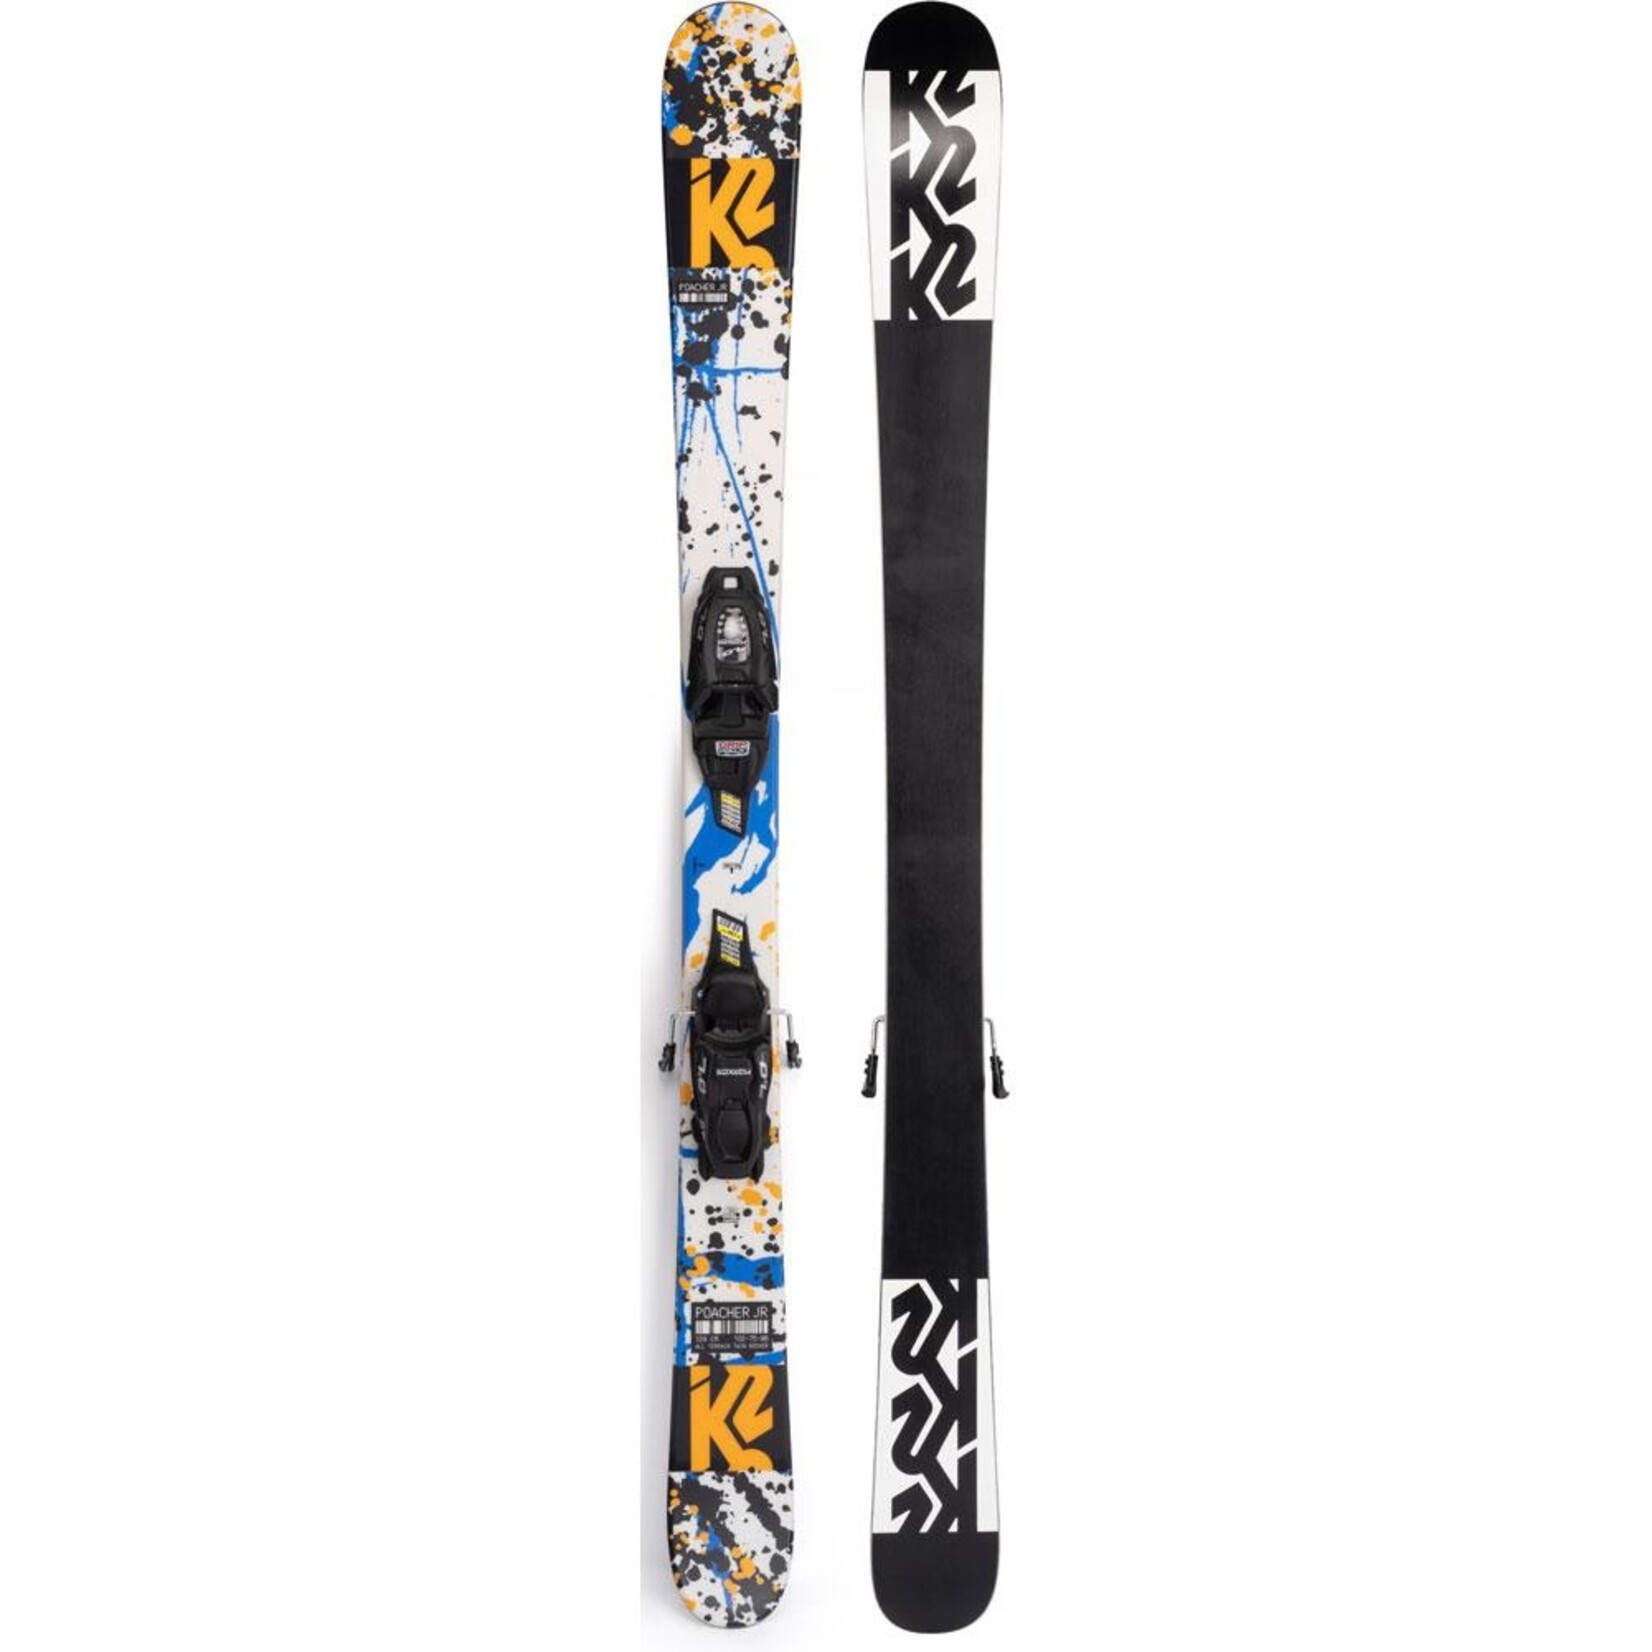 K2 K2 Poacher JR Skis with 7.0 FDT 139cm